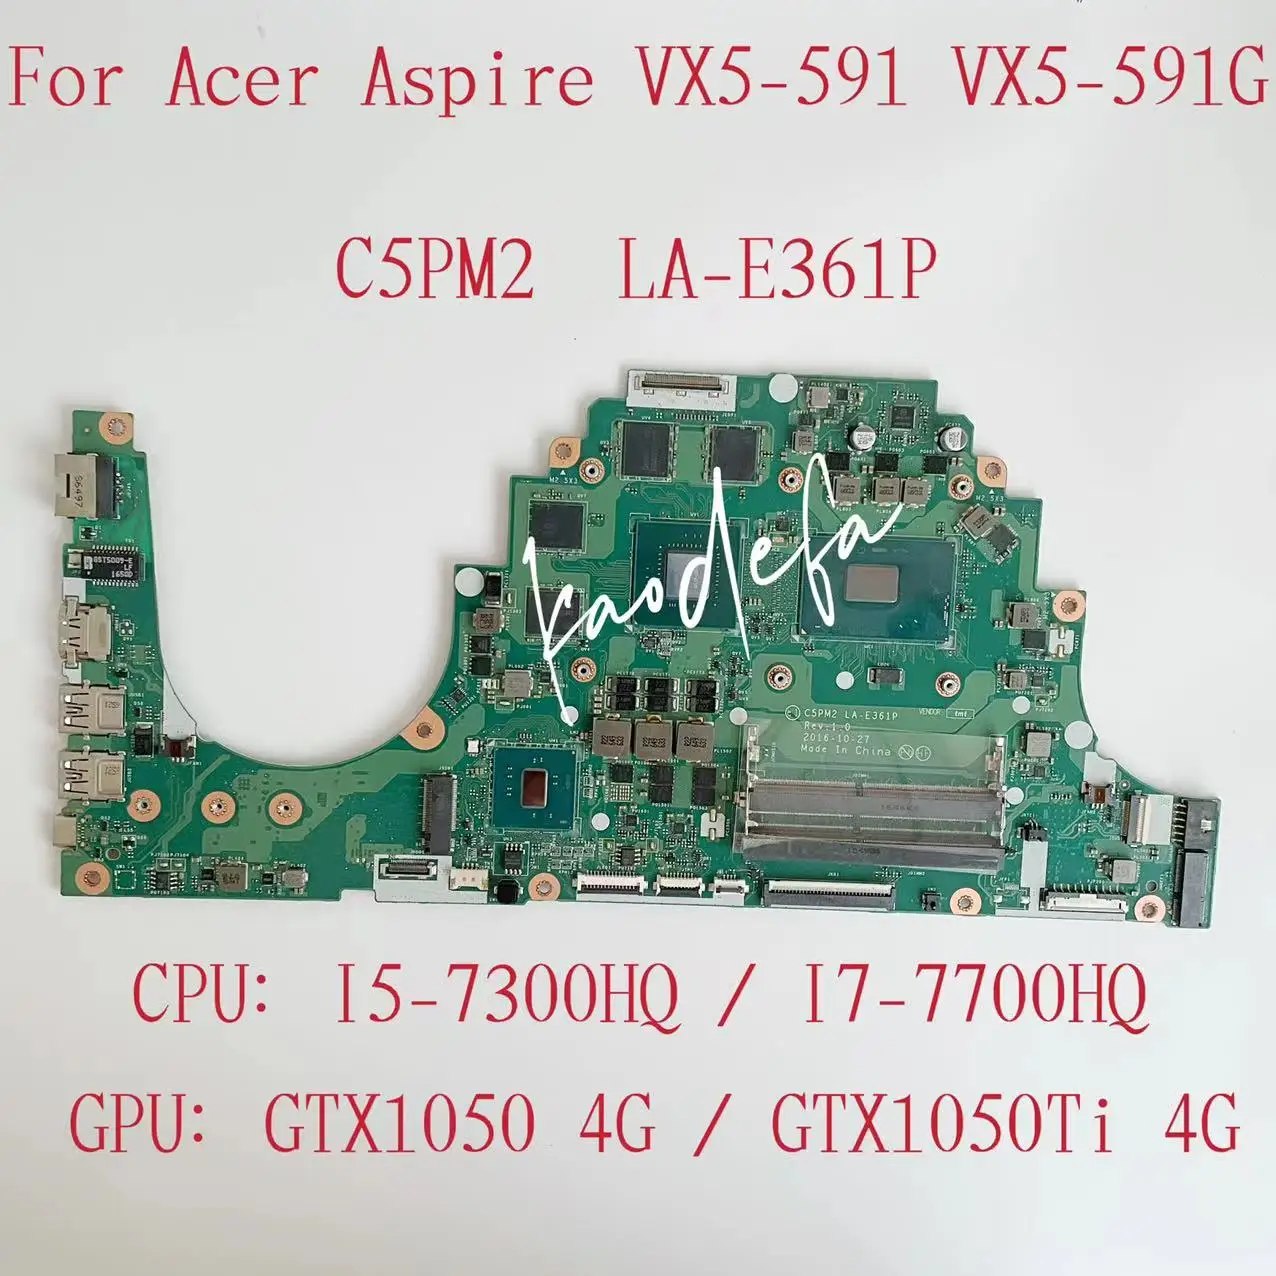 C5PM2 LA-E361P PRIMEIRA PRINCIPAL PARA ACER ASPIRE VX5-591 LAPTOP CPU I5-7300HQ / I7-7700HQ GPU: GTX1050 / 1050TI 4G TESTE OK